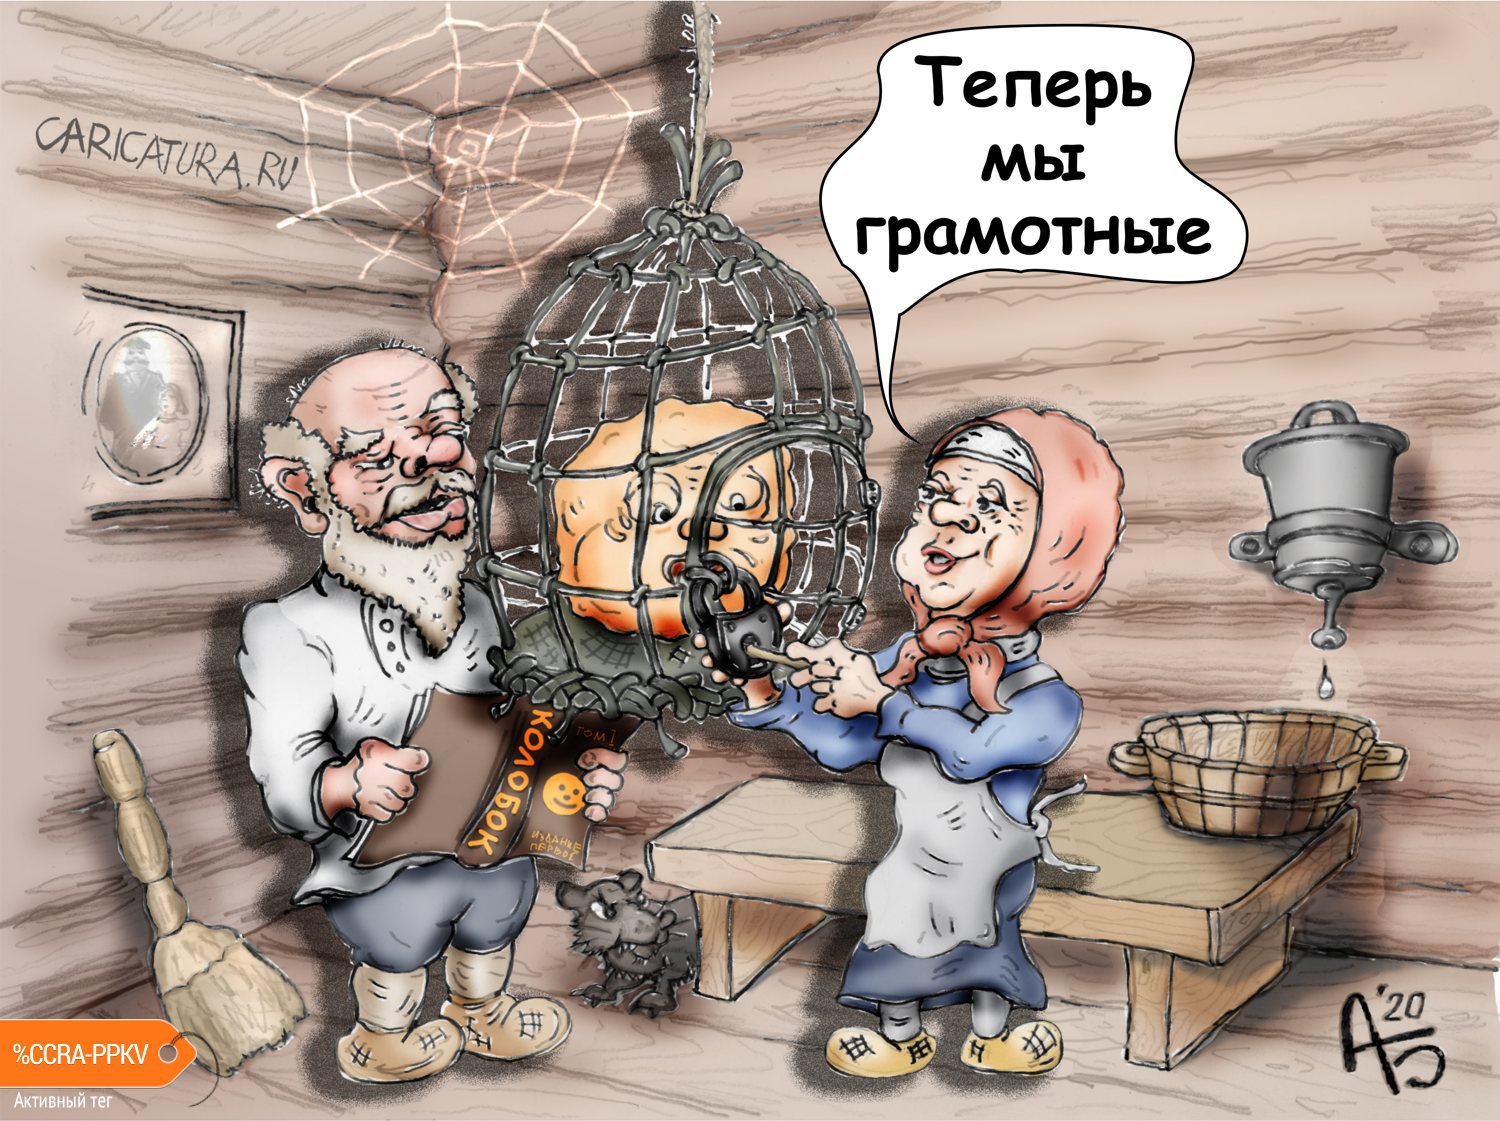 Карикатура "Исправляя историю", Александр Богданов